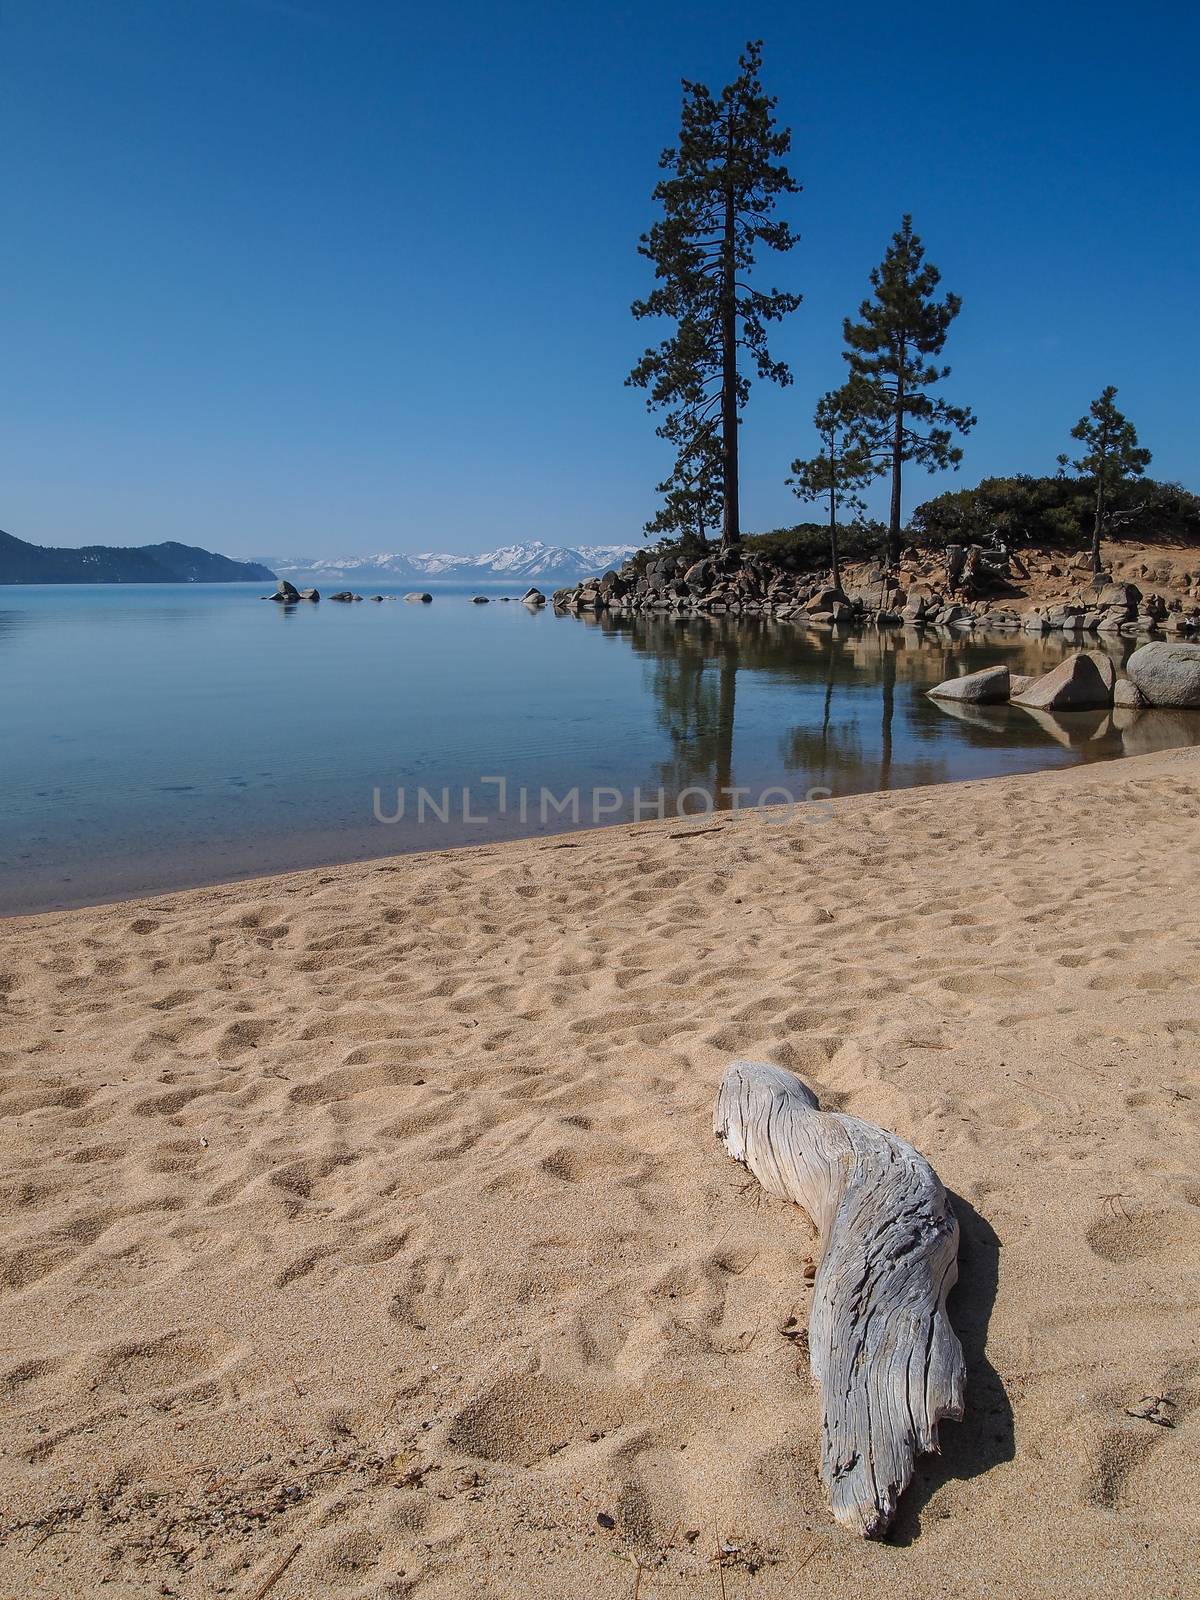 Landscape of Lake Tahoe by simpleBE